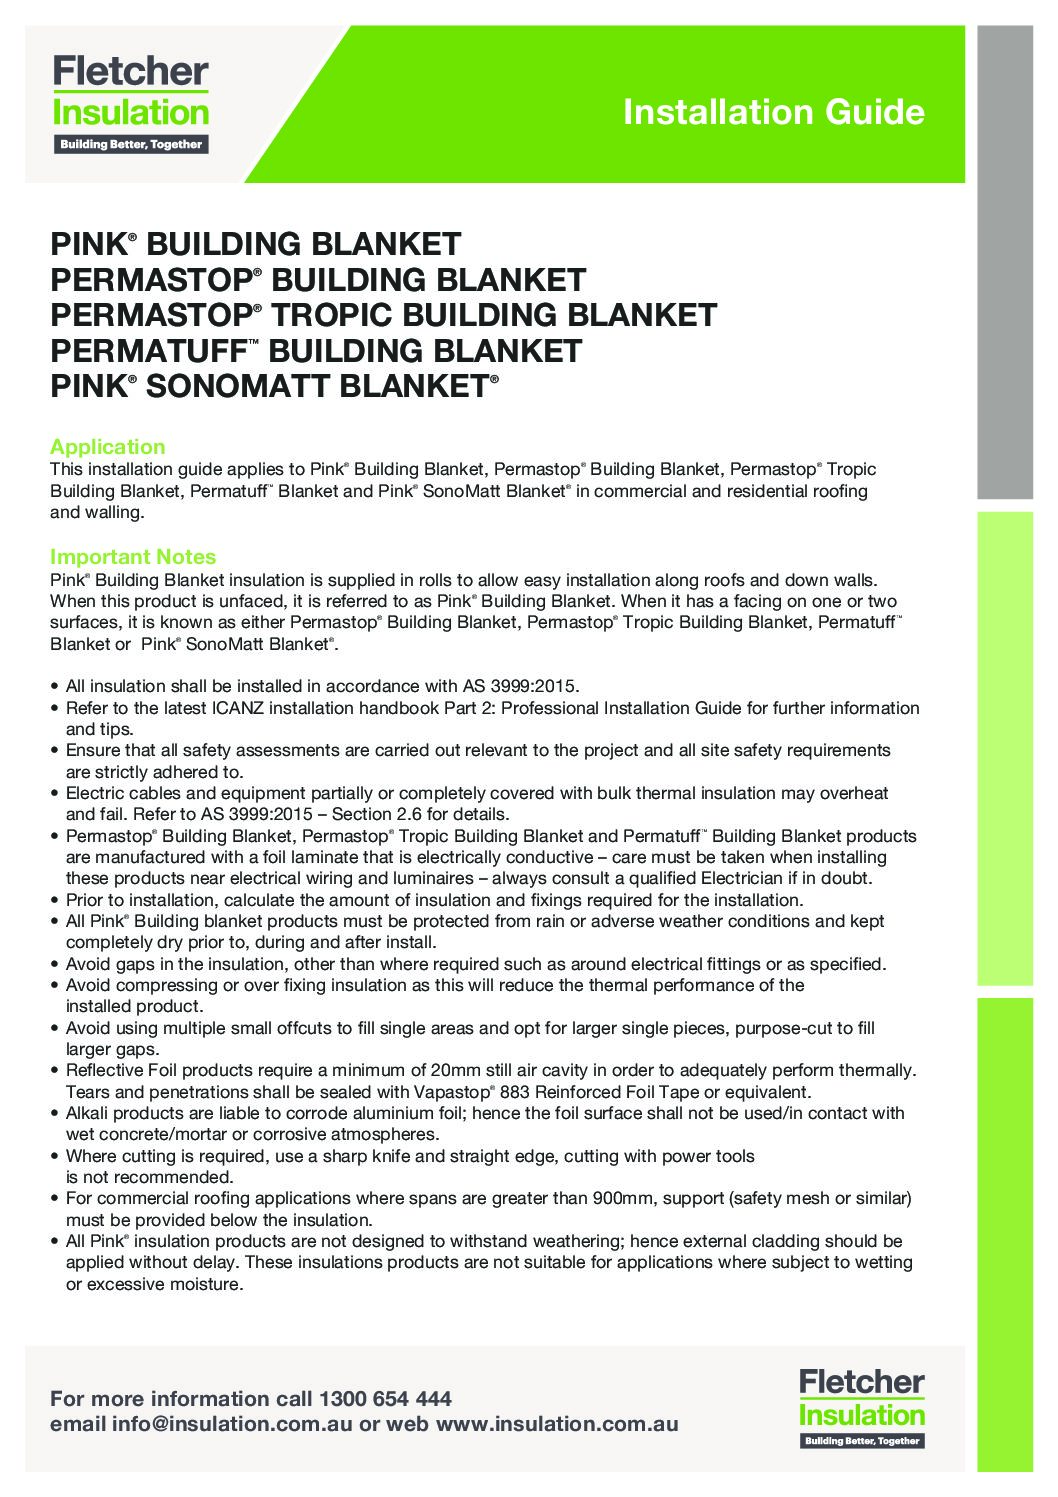 Installation Guidelines – Building Blankets – Pink® Building Blanket, Permastop®, Permastop® Tropic, Permatuff™, Pink® SonoMatt